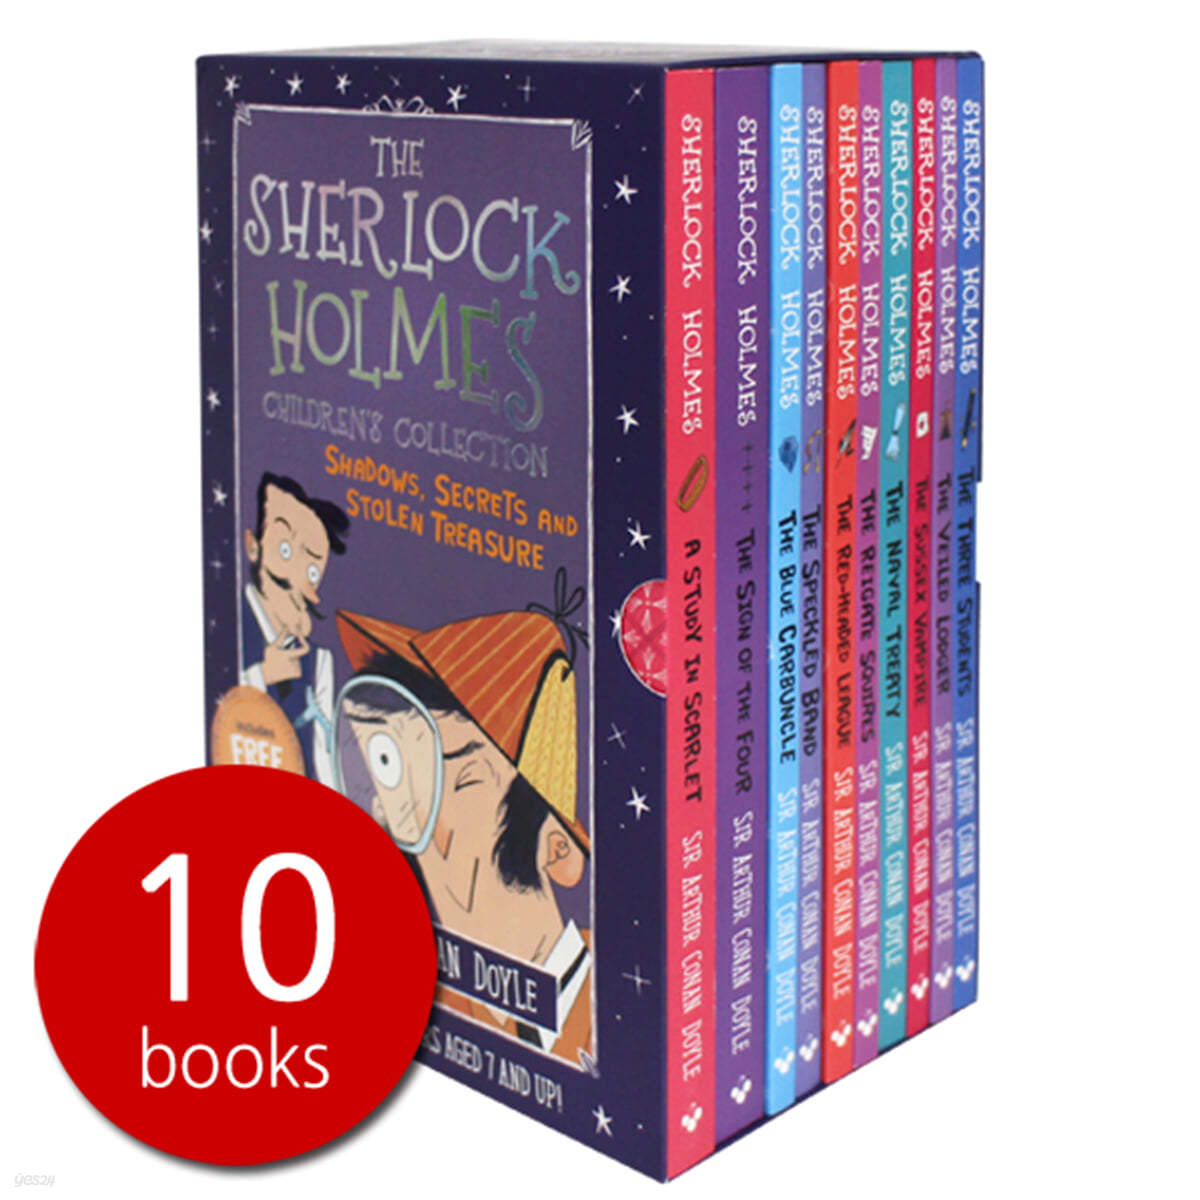 The Sherlock Holmes Childrens Collection 10 Books Box Set - 챕터북